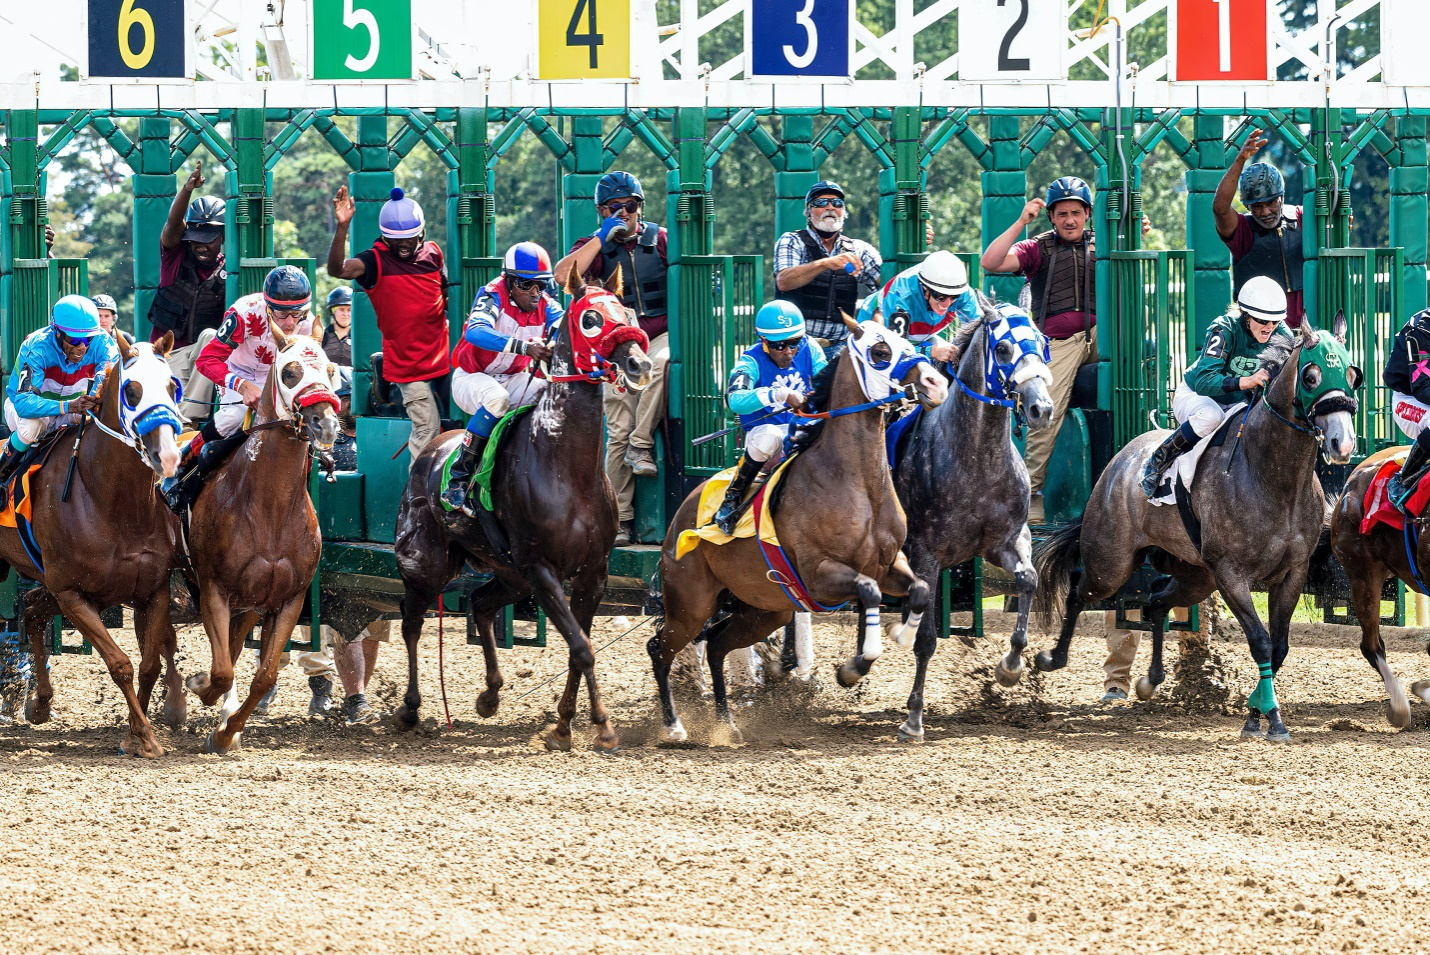 horse racing picks